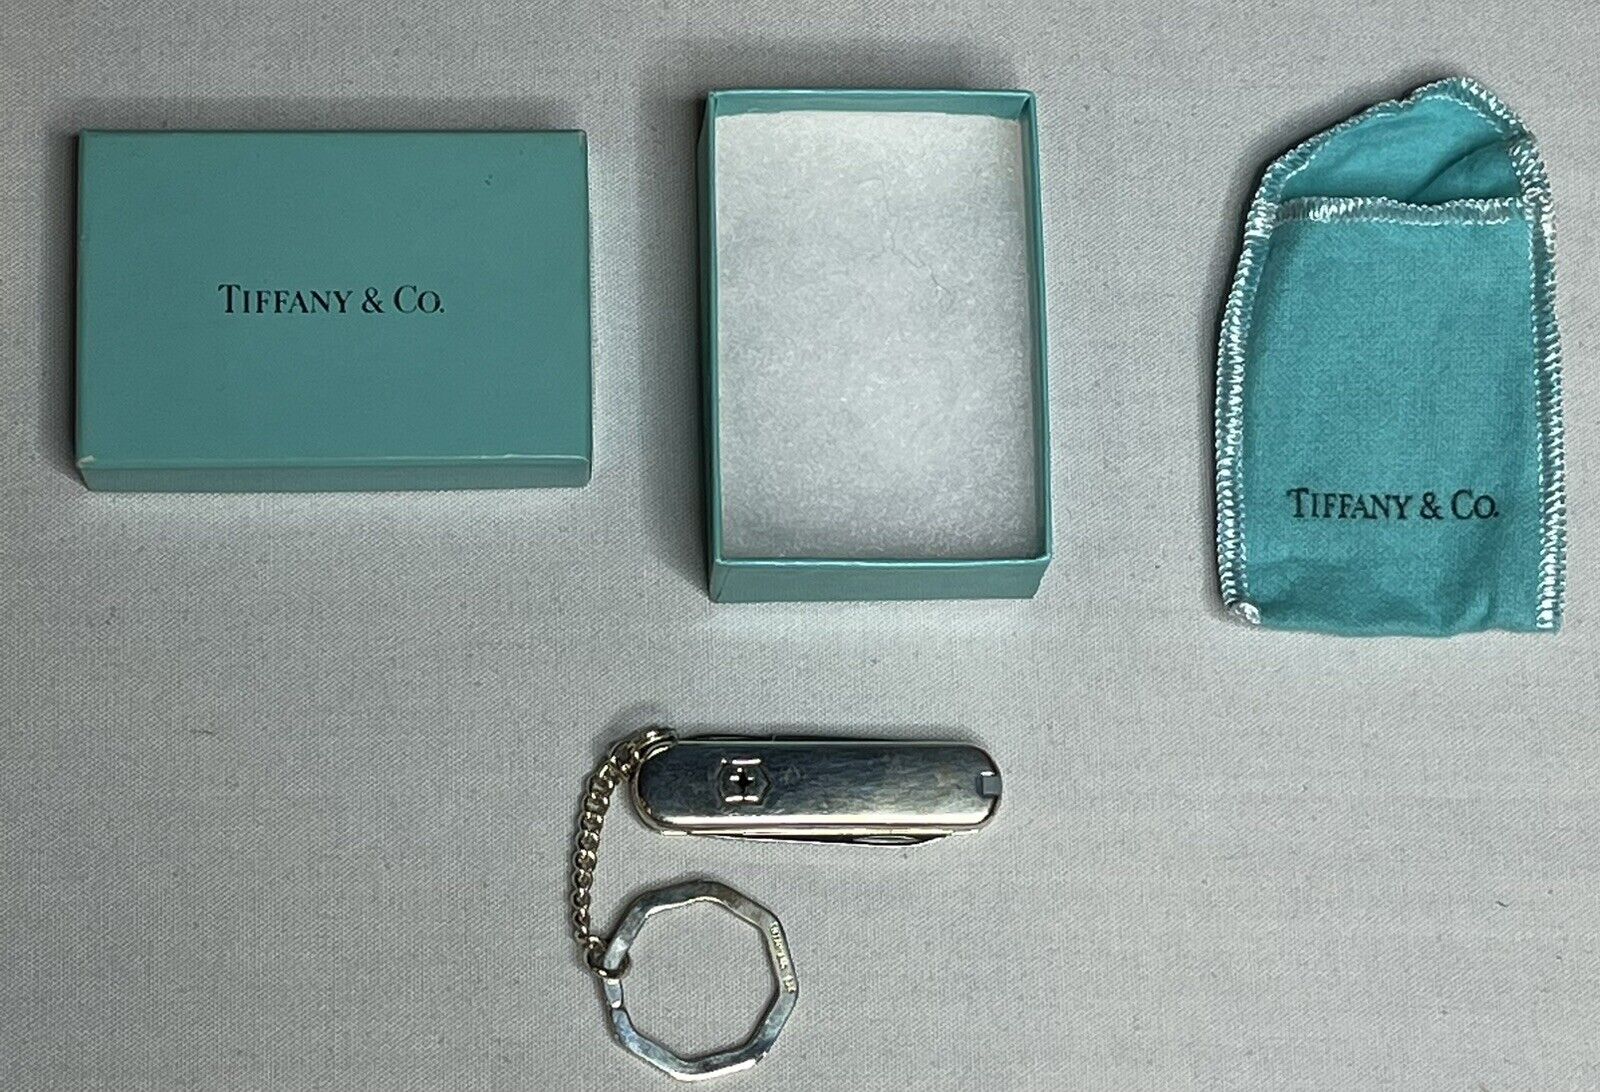 Vintage Tiffany & Co. Swiss Army Knife.